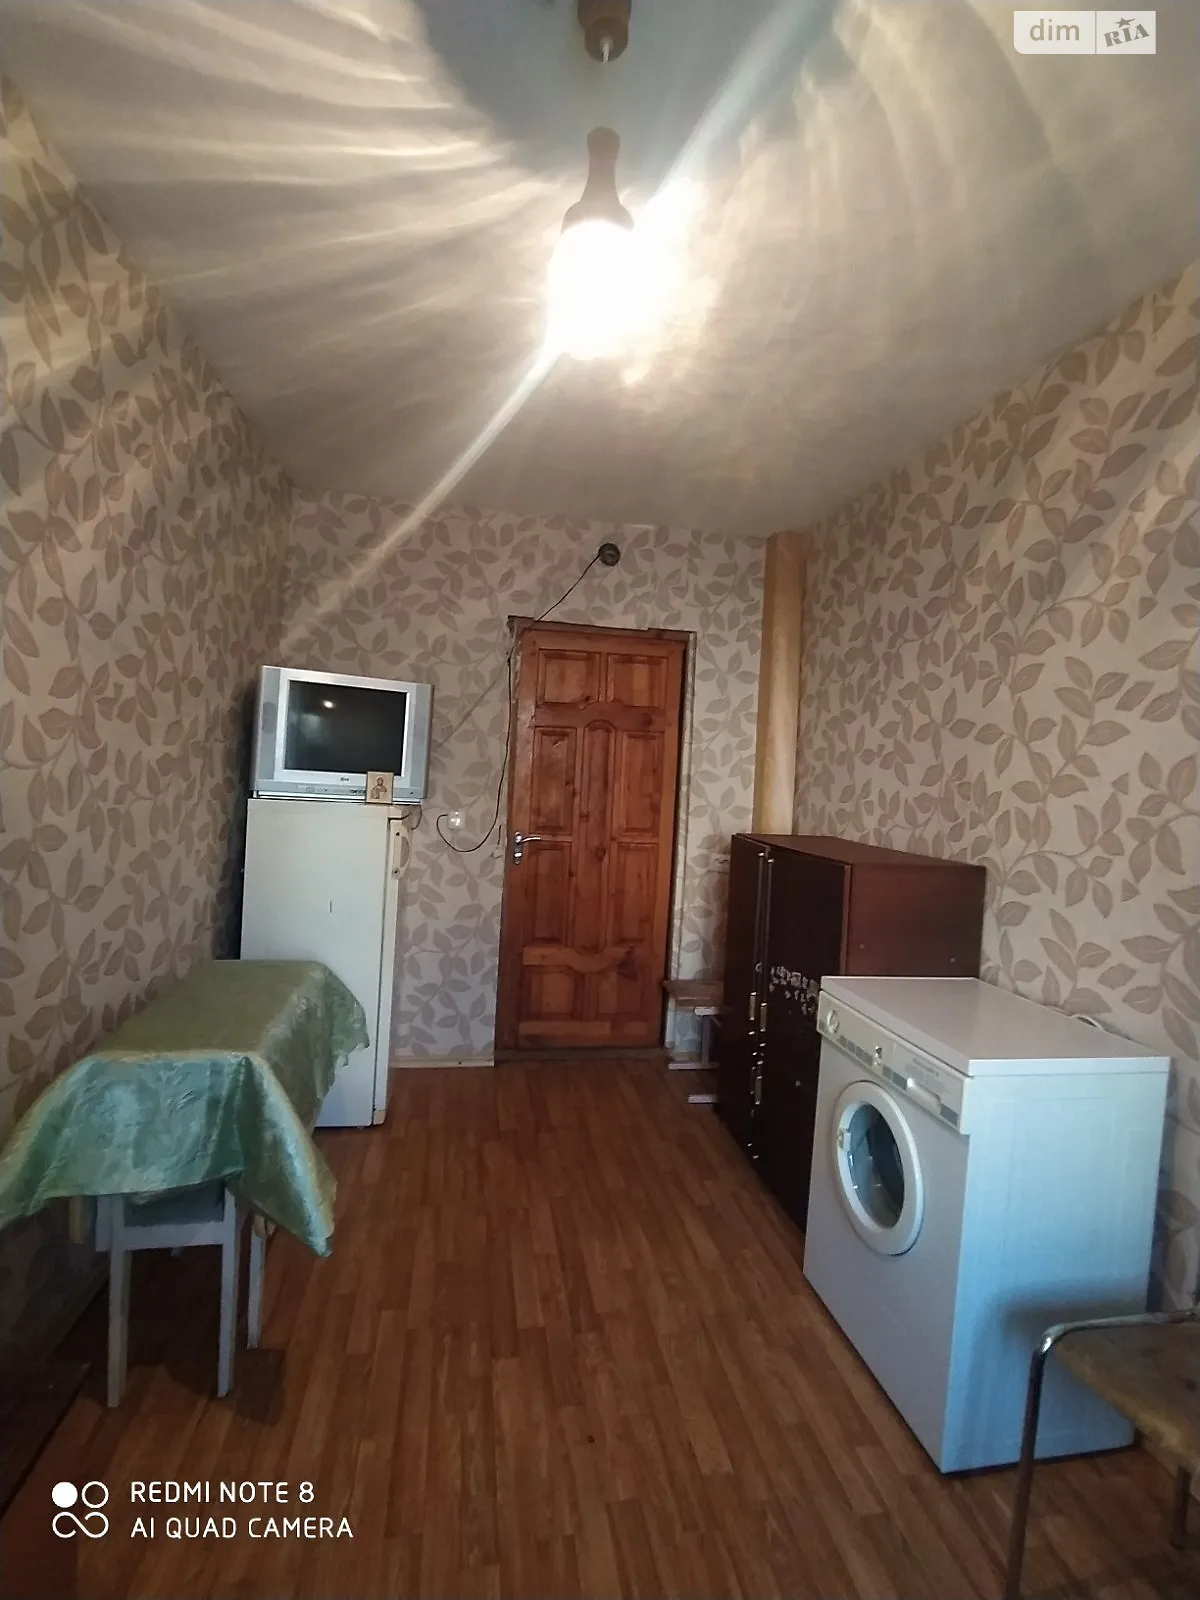 Продается комната 16 кв. м в Черноморске, цена: 6500 $ - фото 1